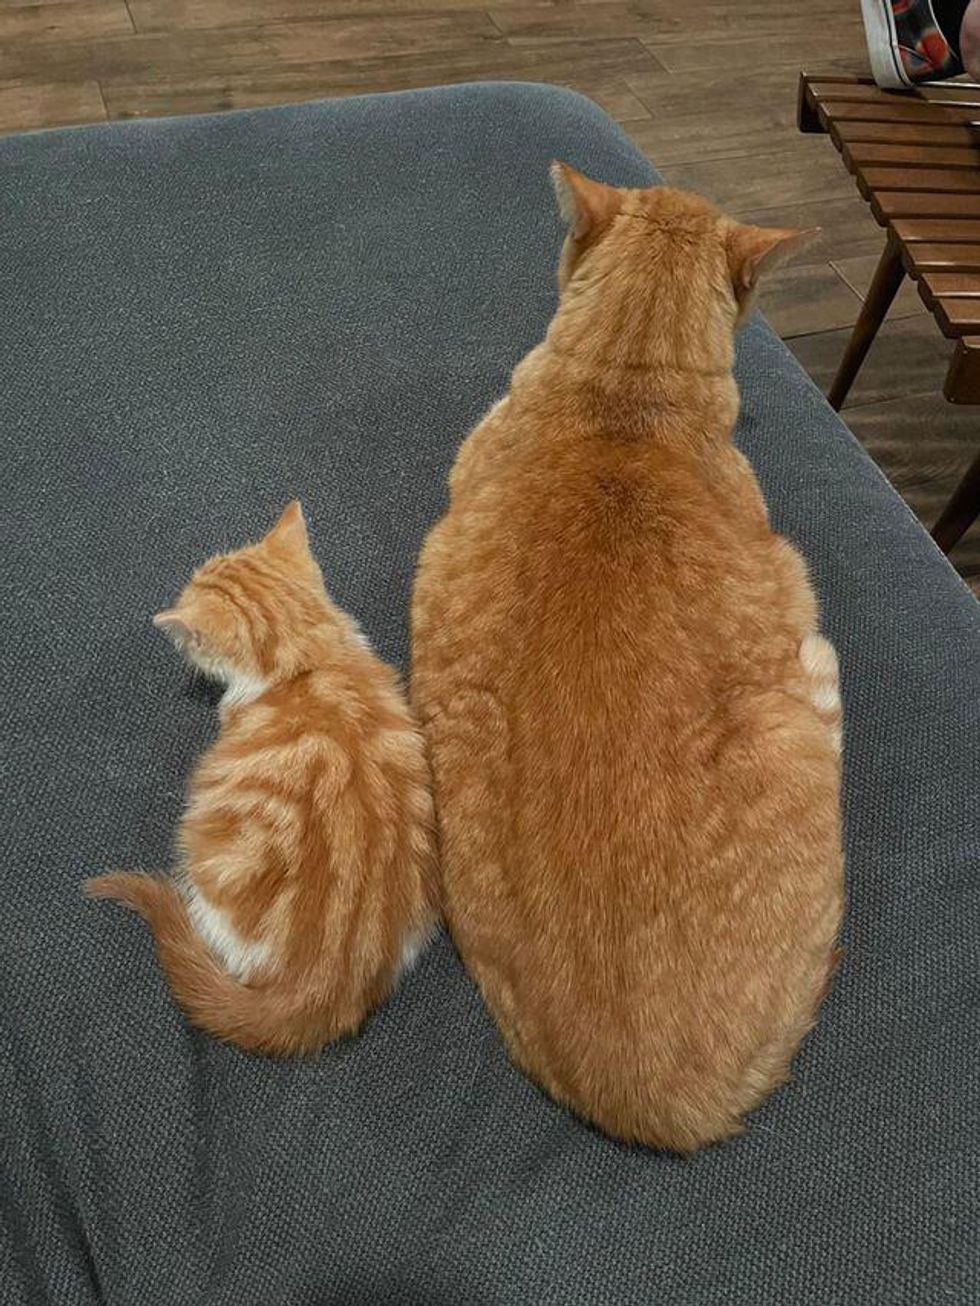 cat kitten loafing